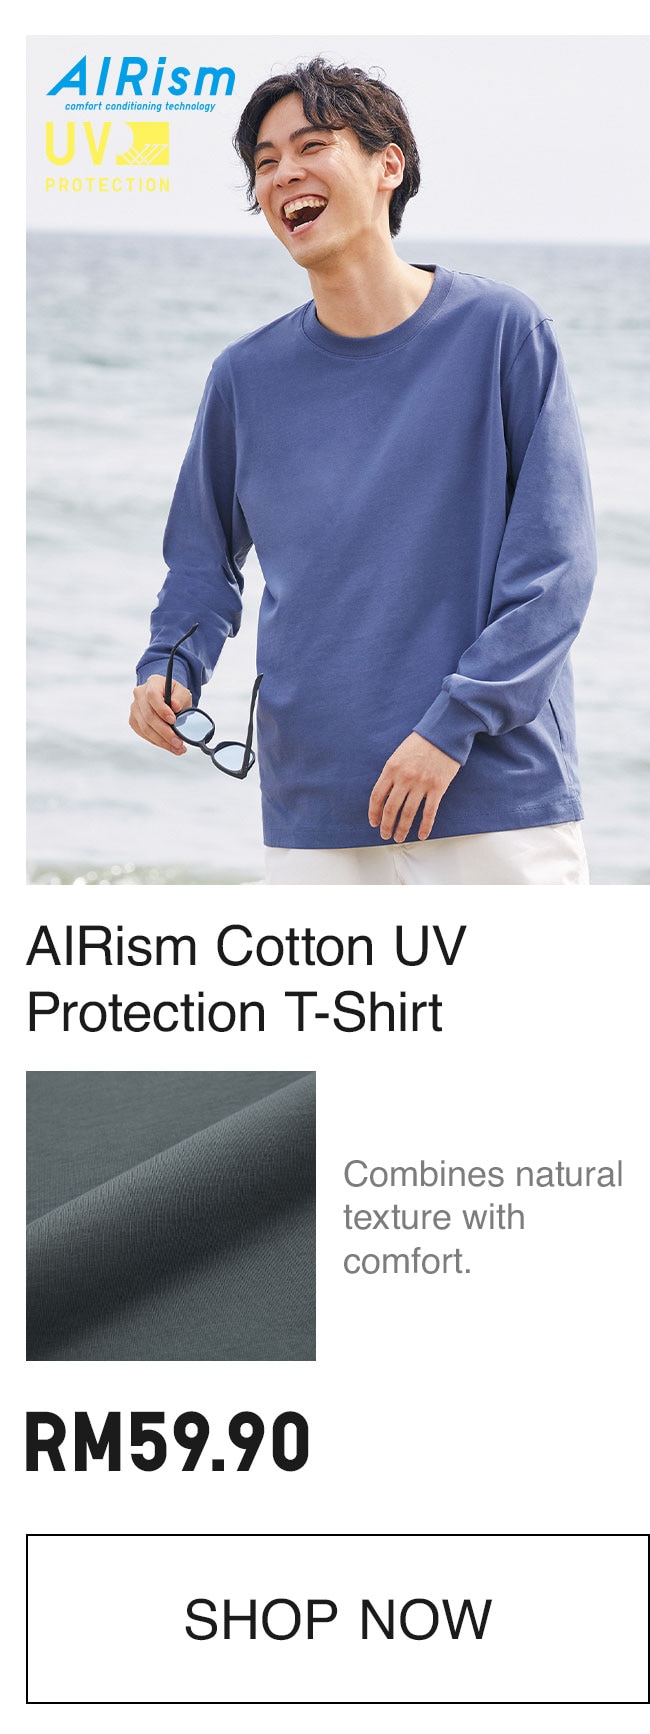 AIRISM COTTON UV PROTECTION T-SHIRT